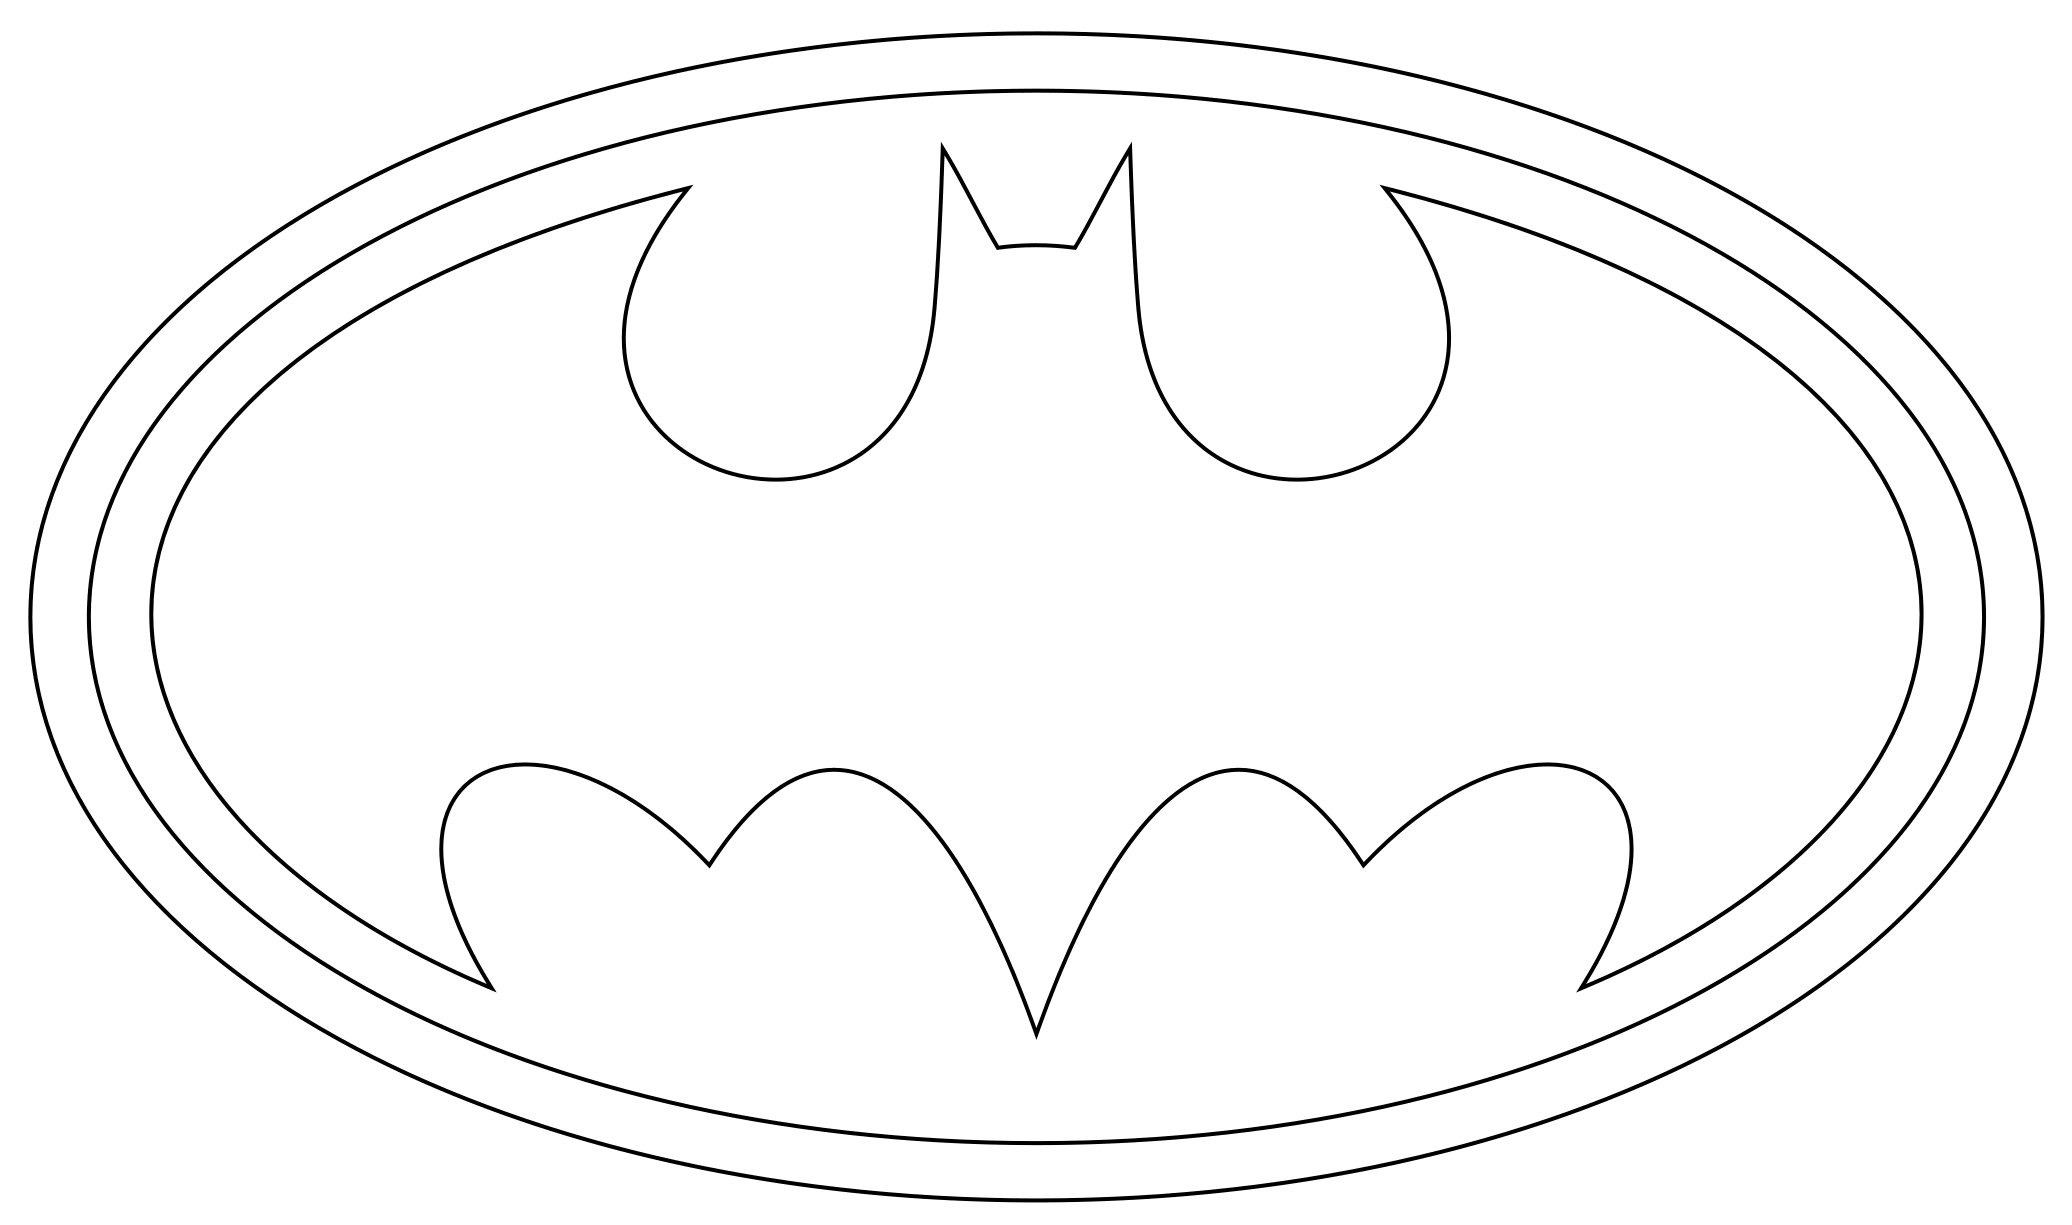 Batman Logos and Batman fan art